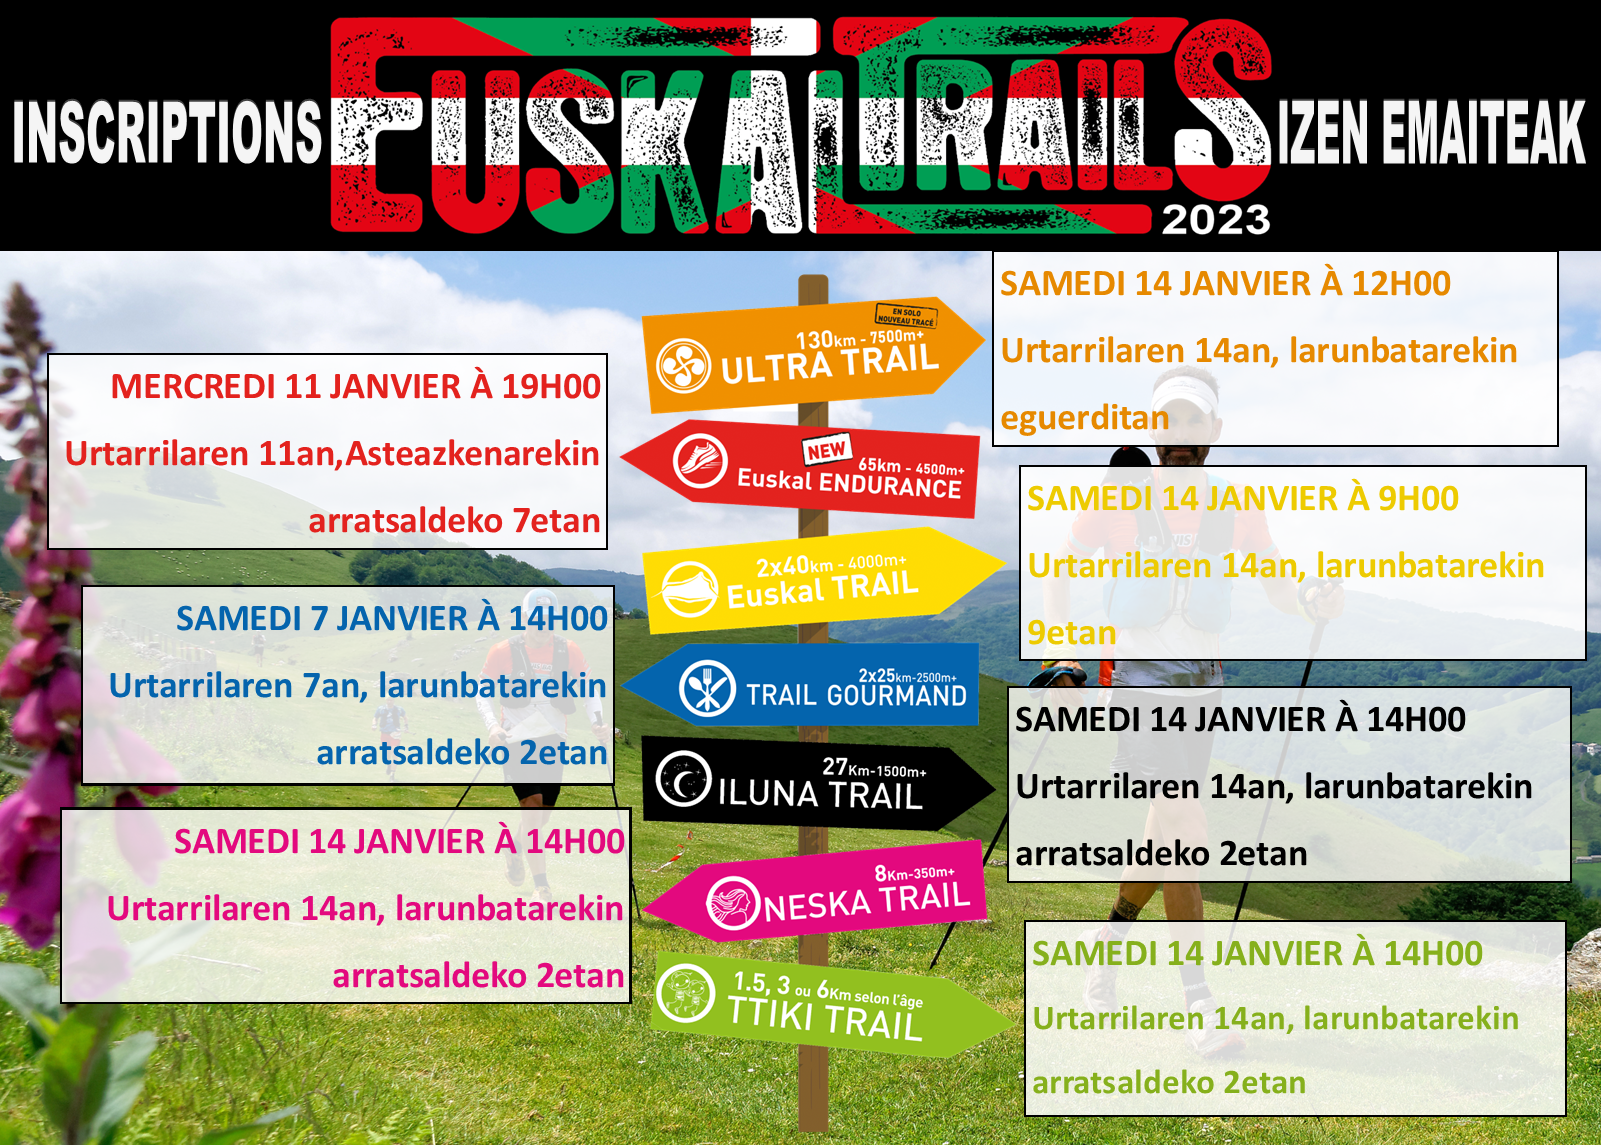 Inscriptions Euskal Trails 2023